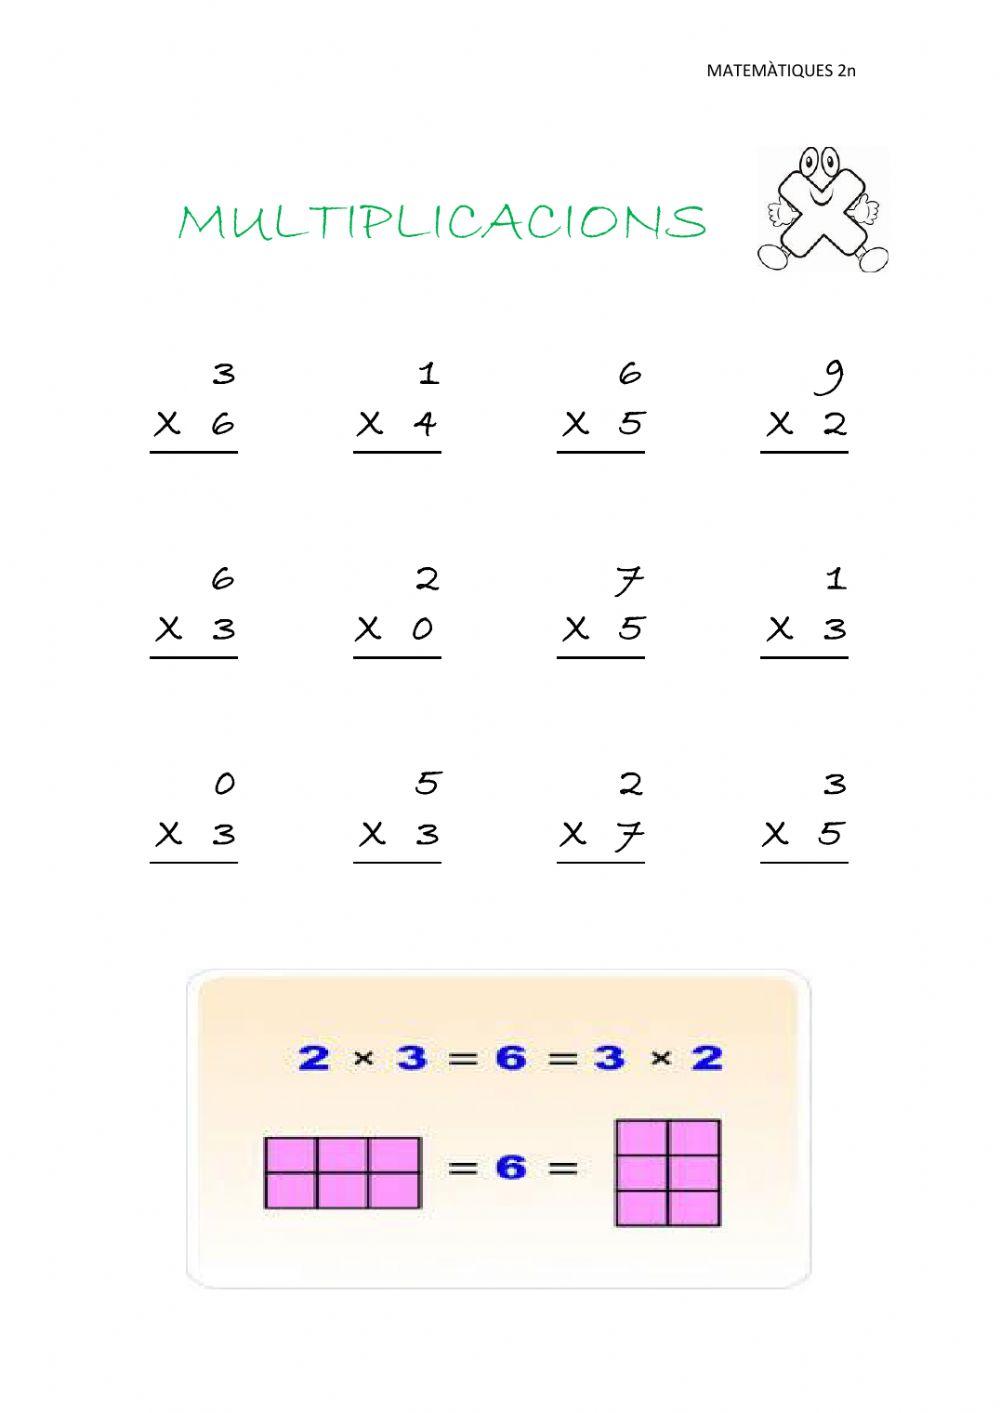 Multiplicacions